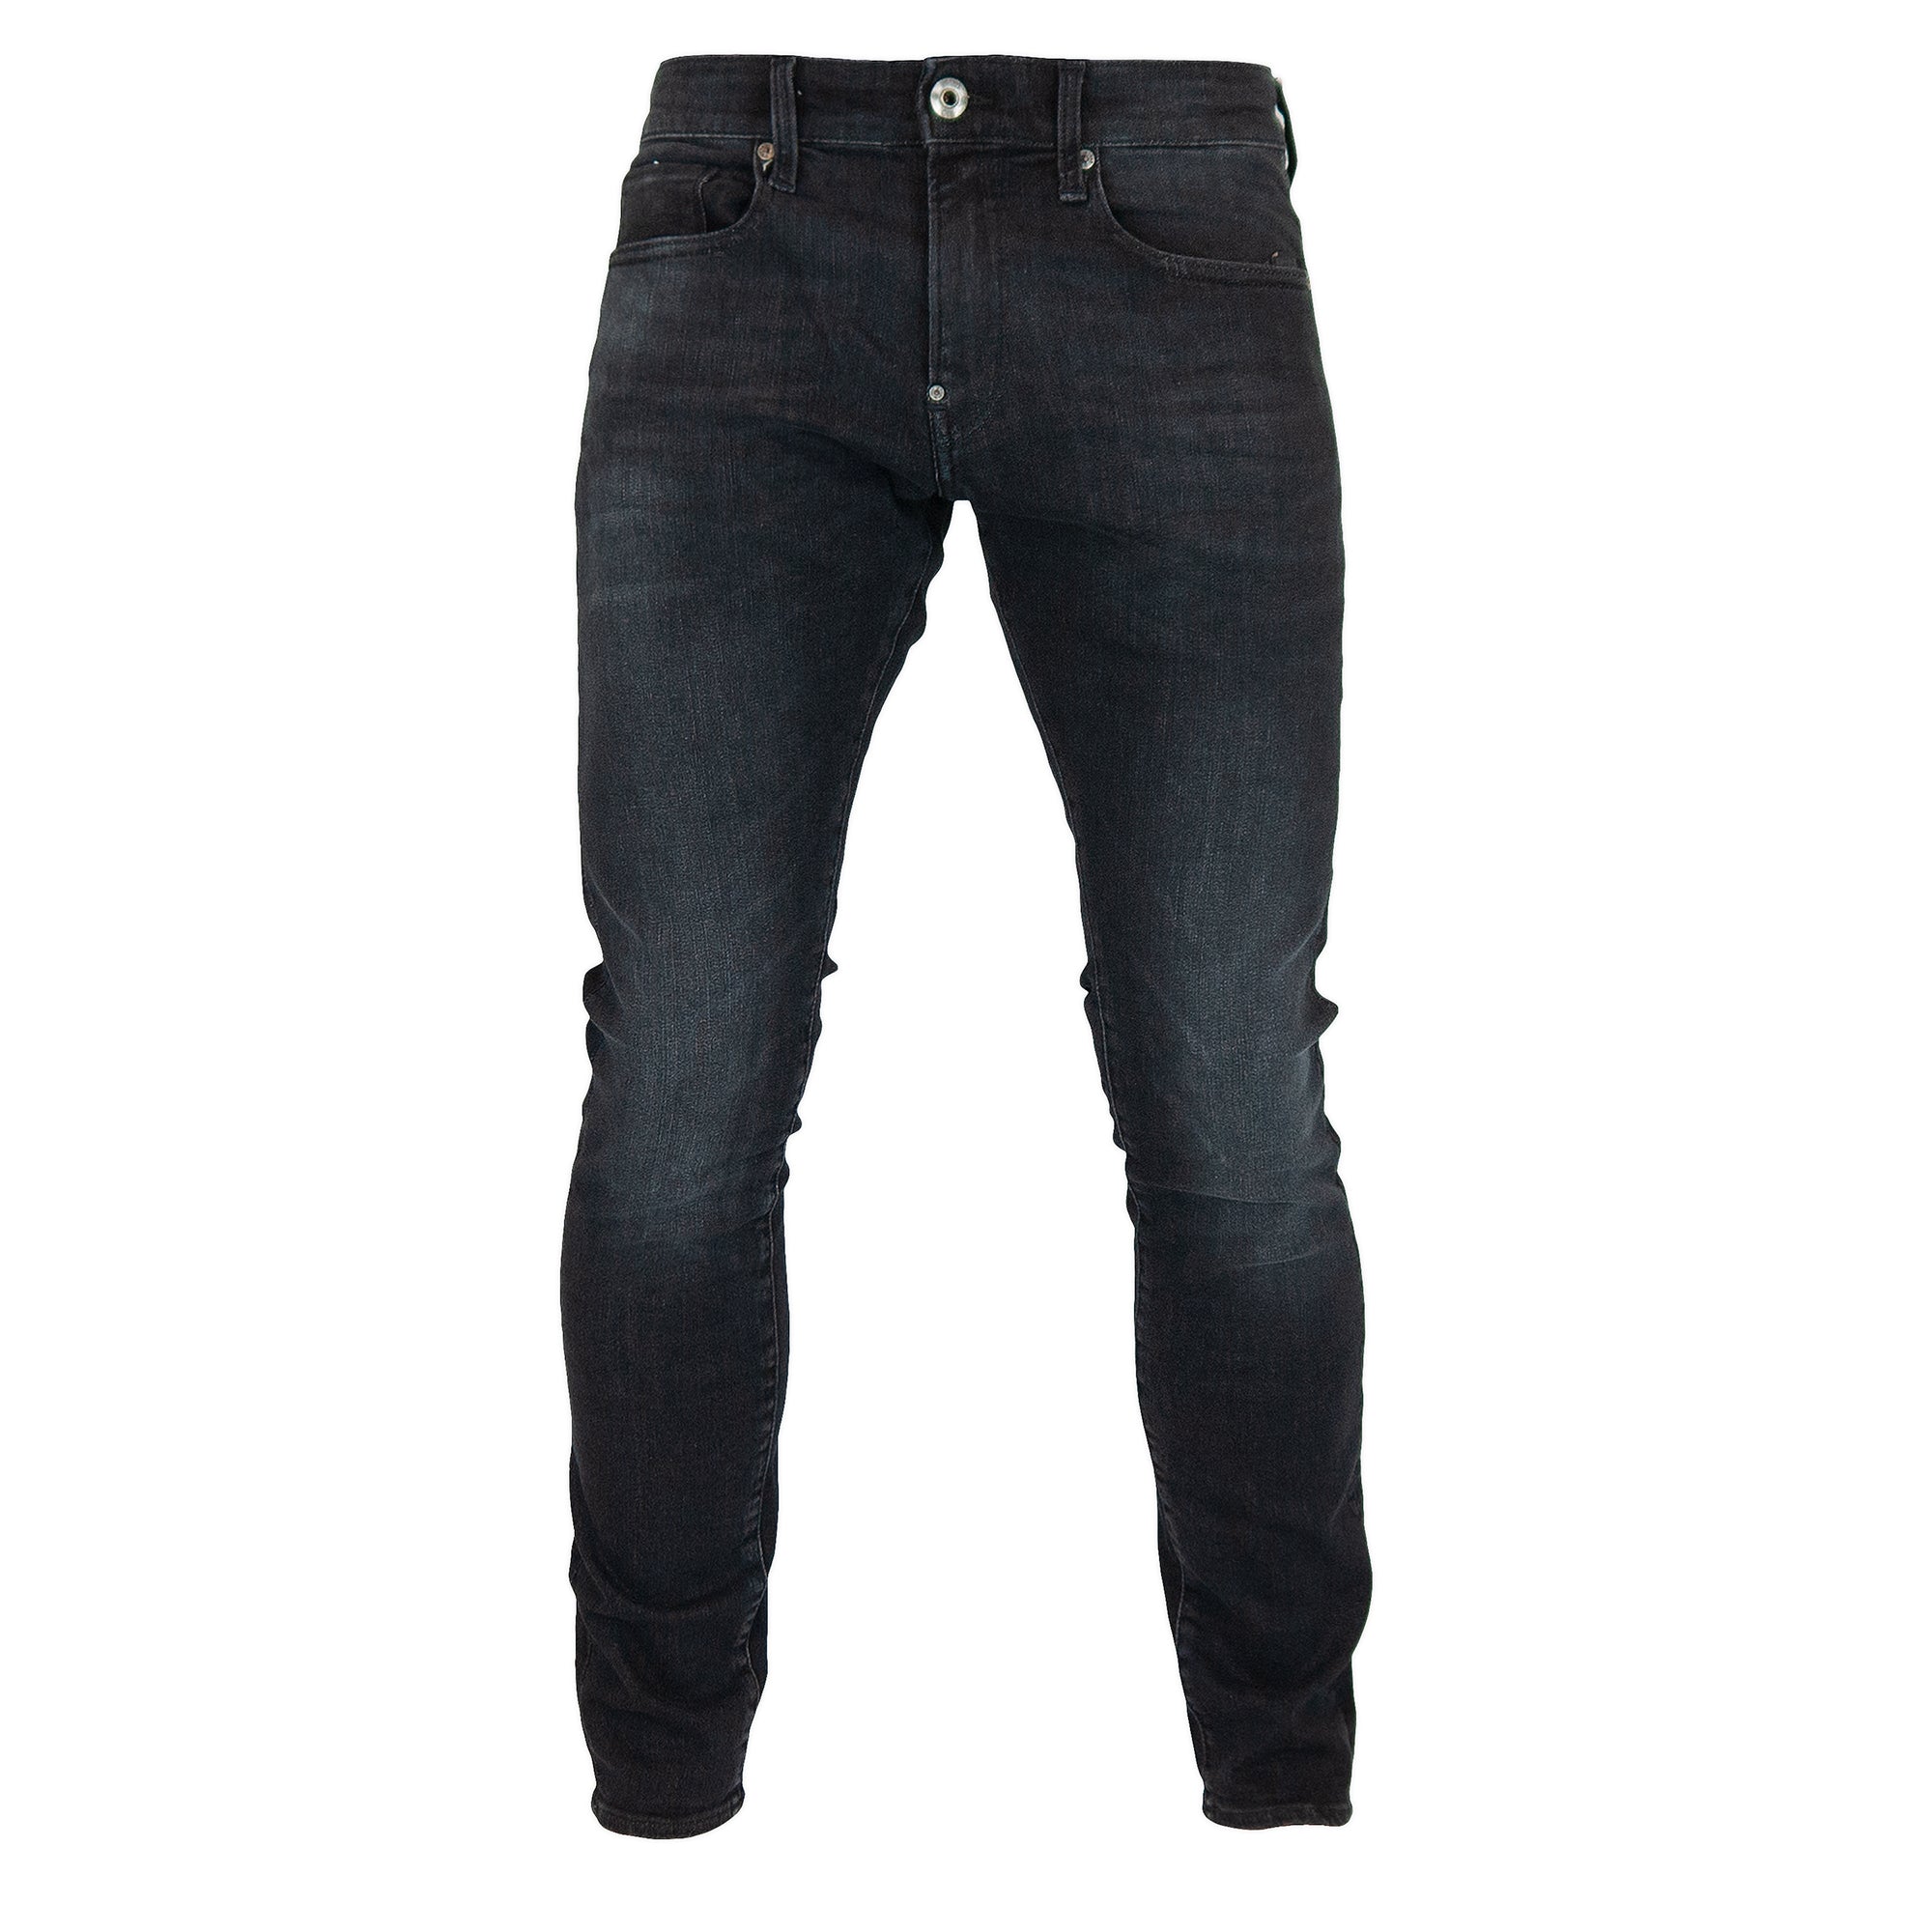 G-Star Revend Skinny Jeans - Medium Elto Aged Faded Superstretch Black